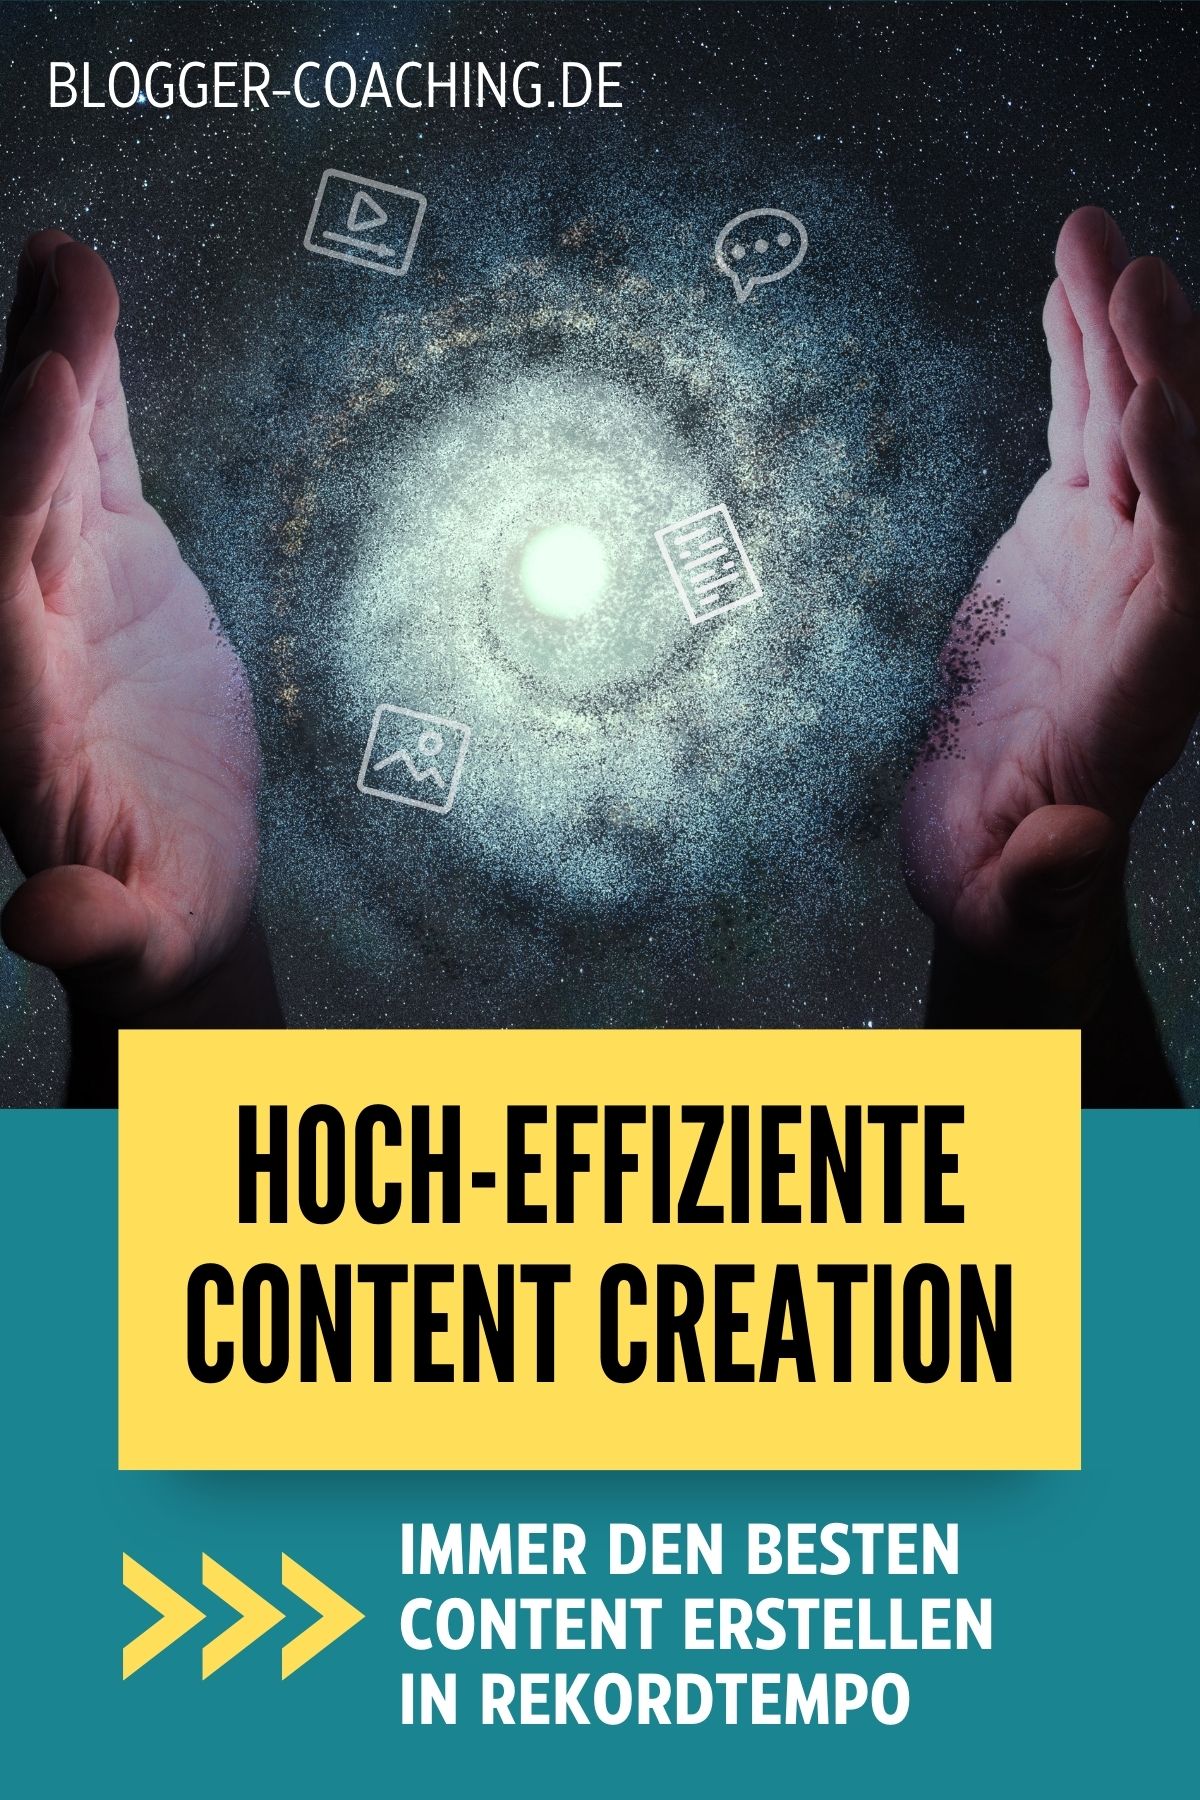 Content Creation Secrets: Tipps & Tricks für effiziente Content Erstellung | Business Blogger-Coaching by Filiz Odenthal